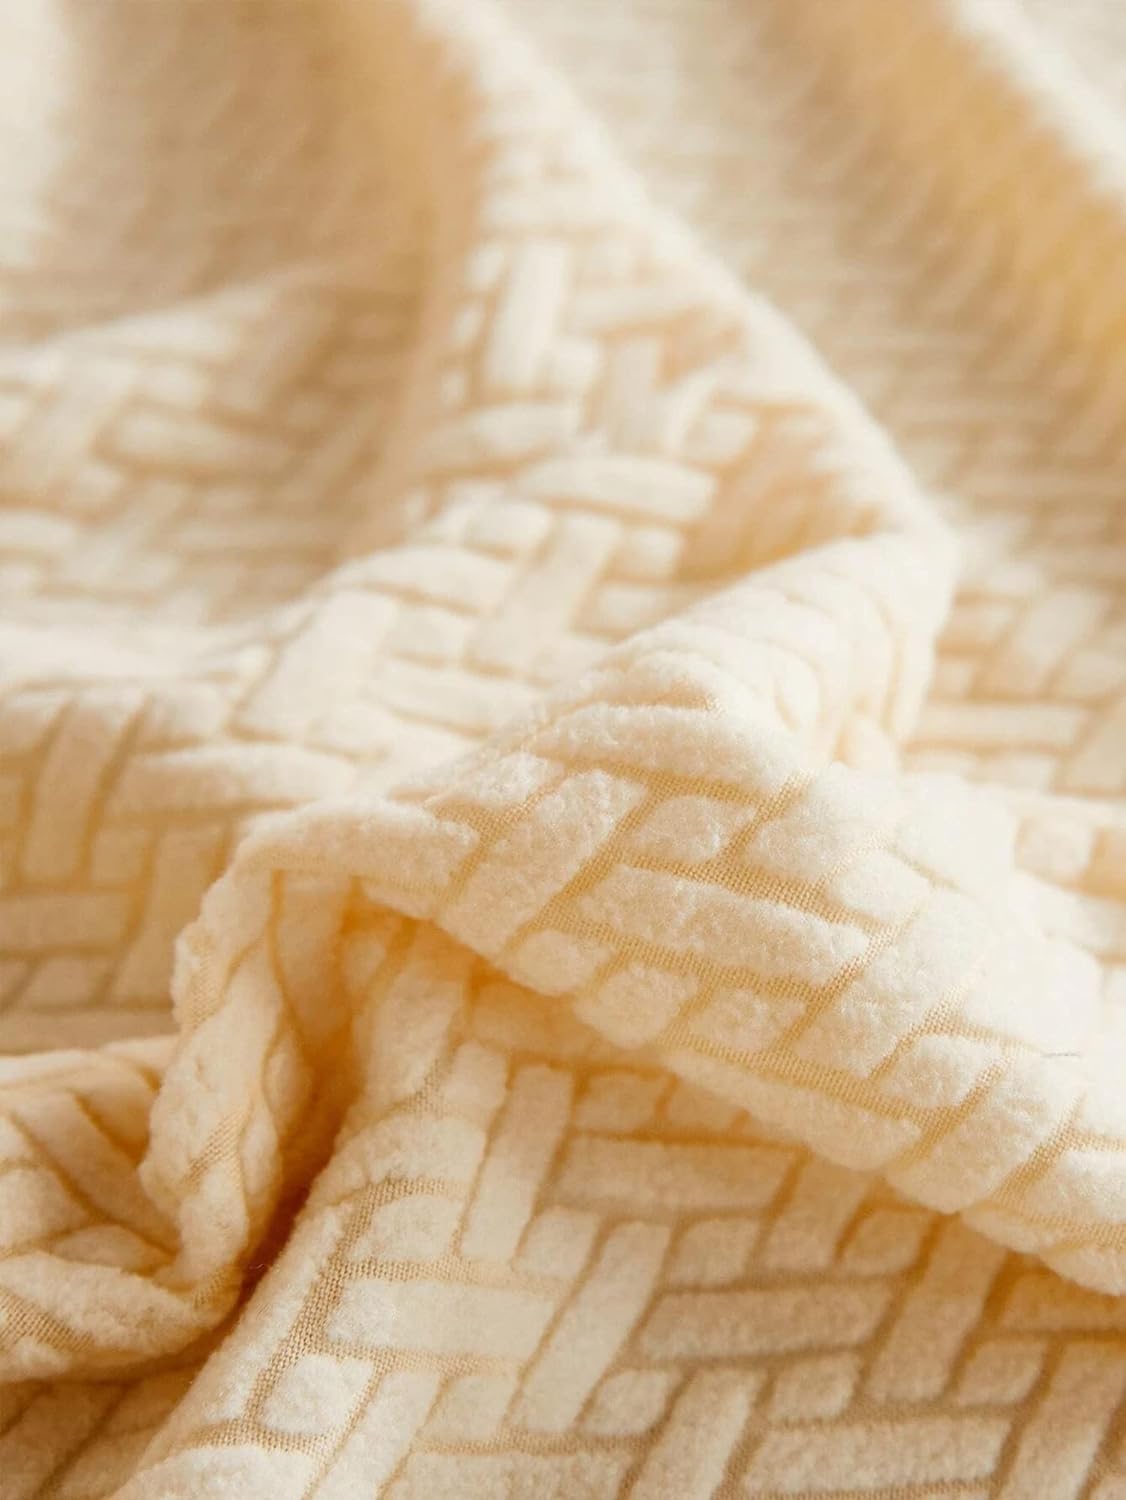 Universal Fleece Fabric Sofa Cover(Pink)